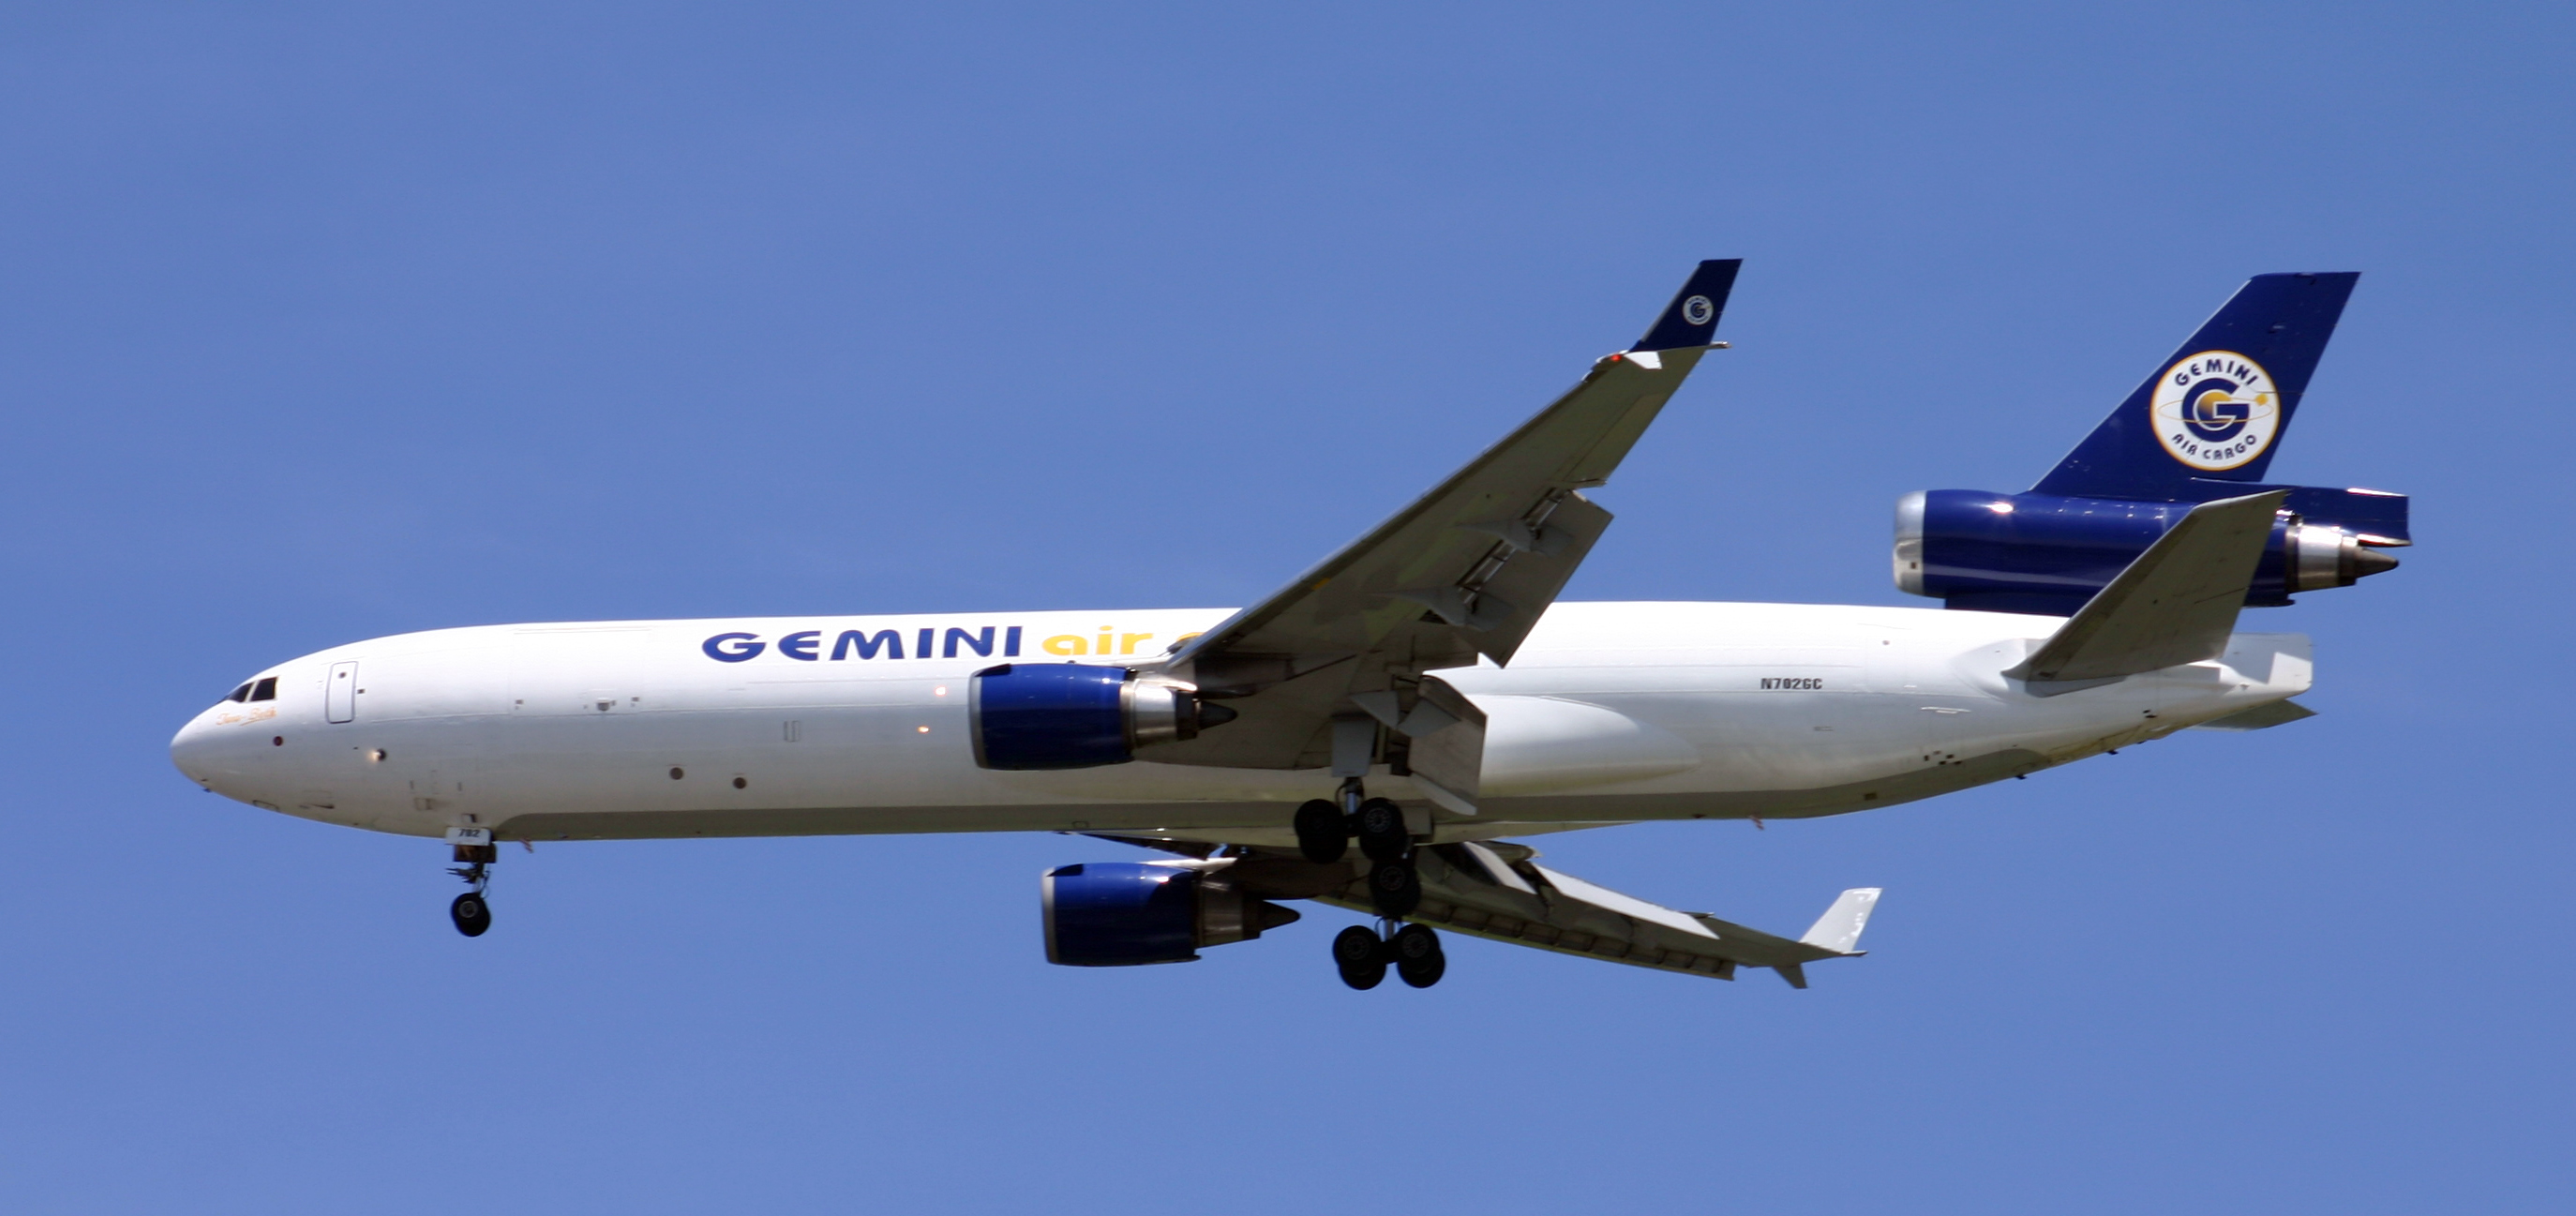 File:Gemini Air Cargo MD-11.jpg - Wikimedia Commons